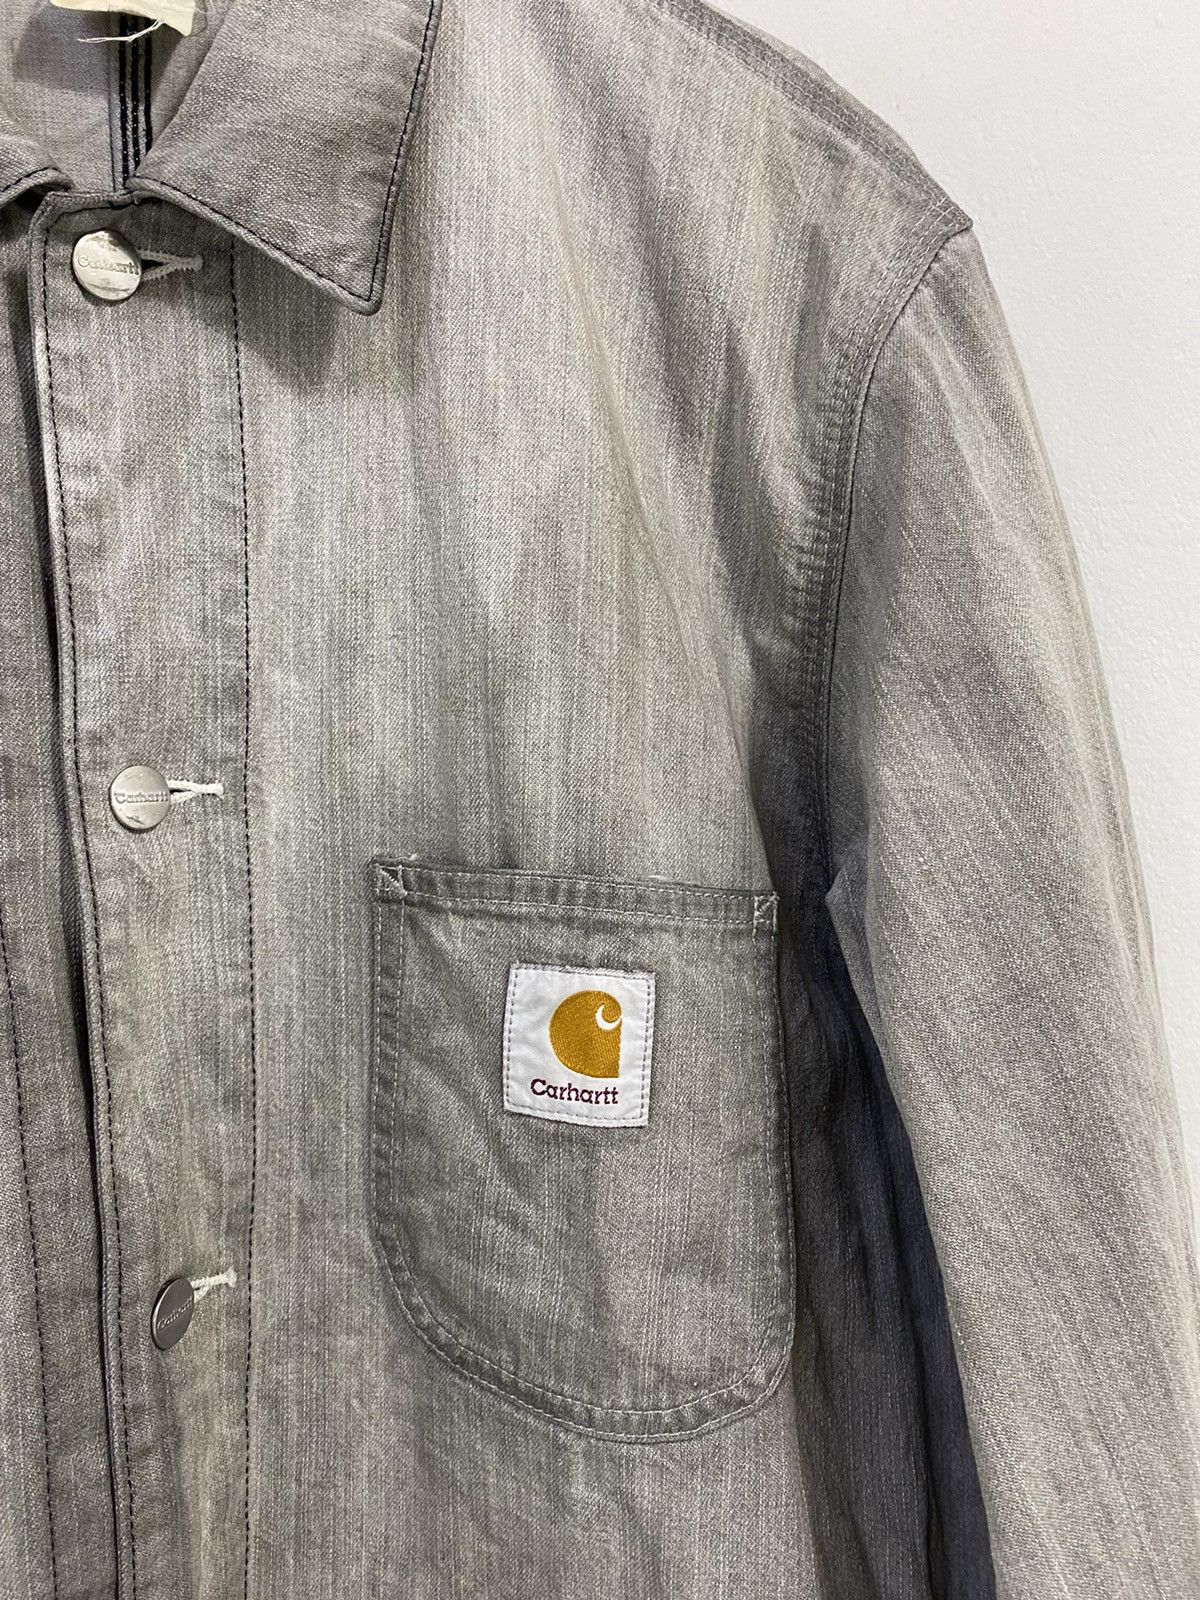 Carhartt Chore Jacket Four Pocket Design Button Up - 3